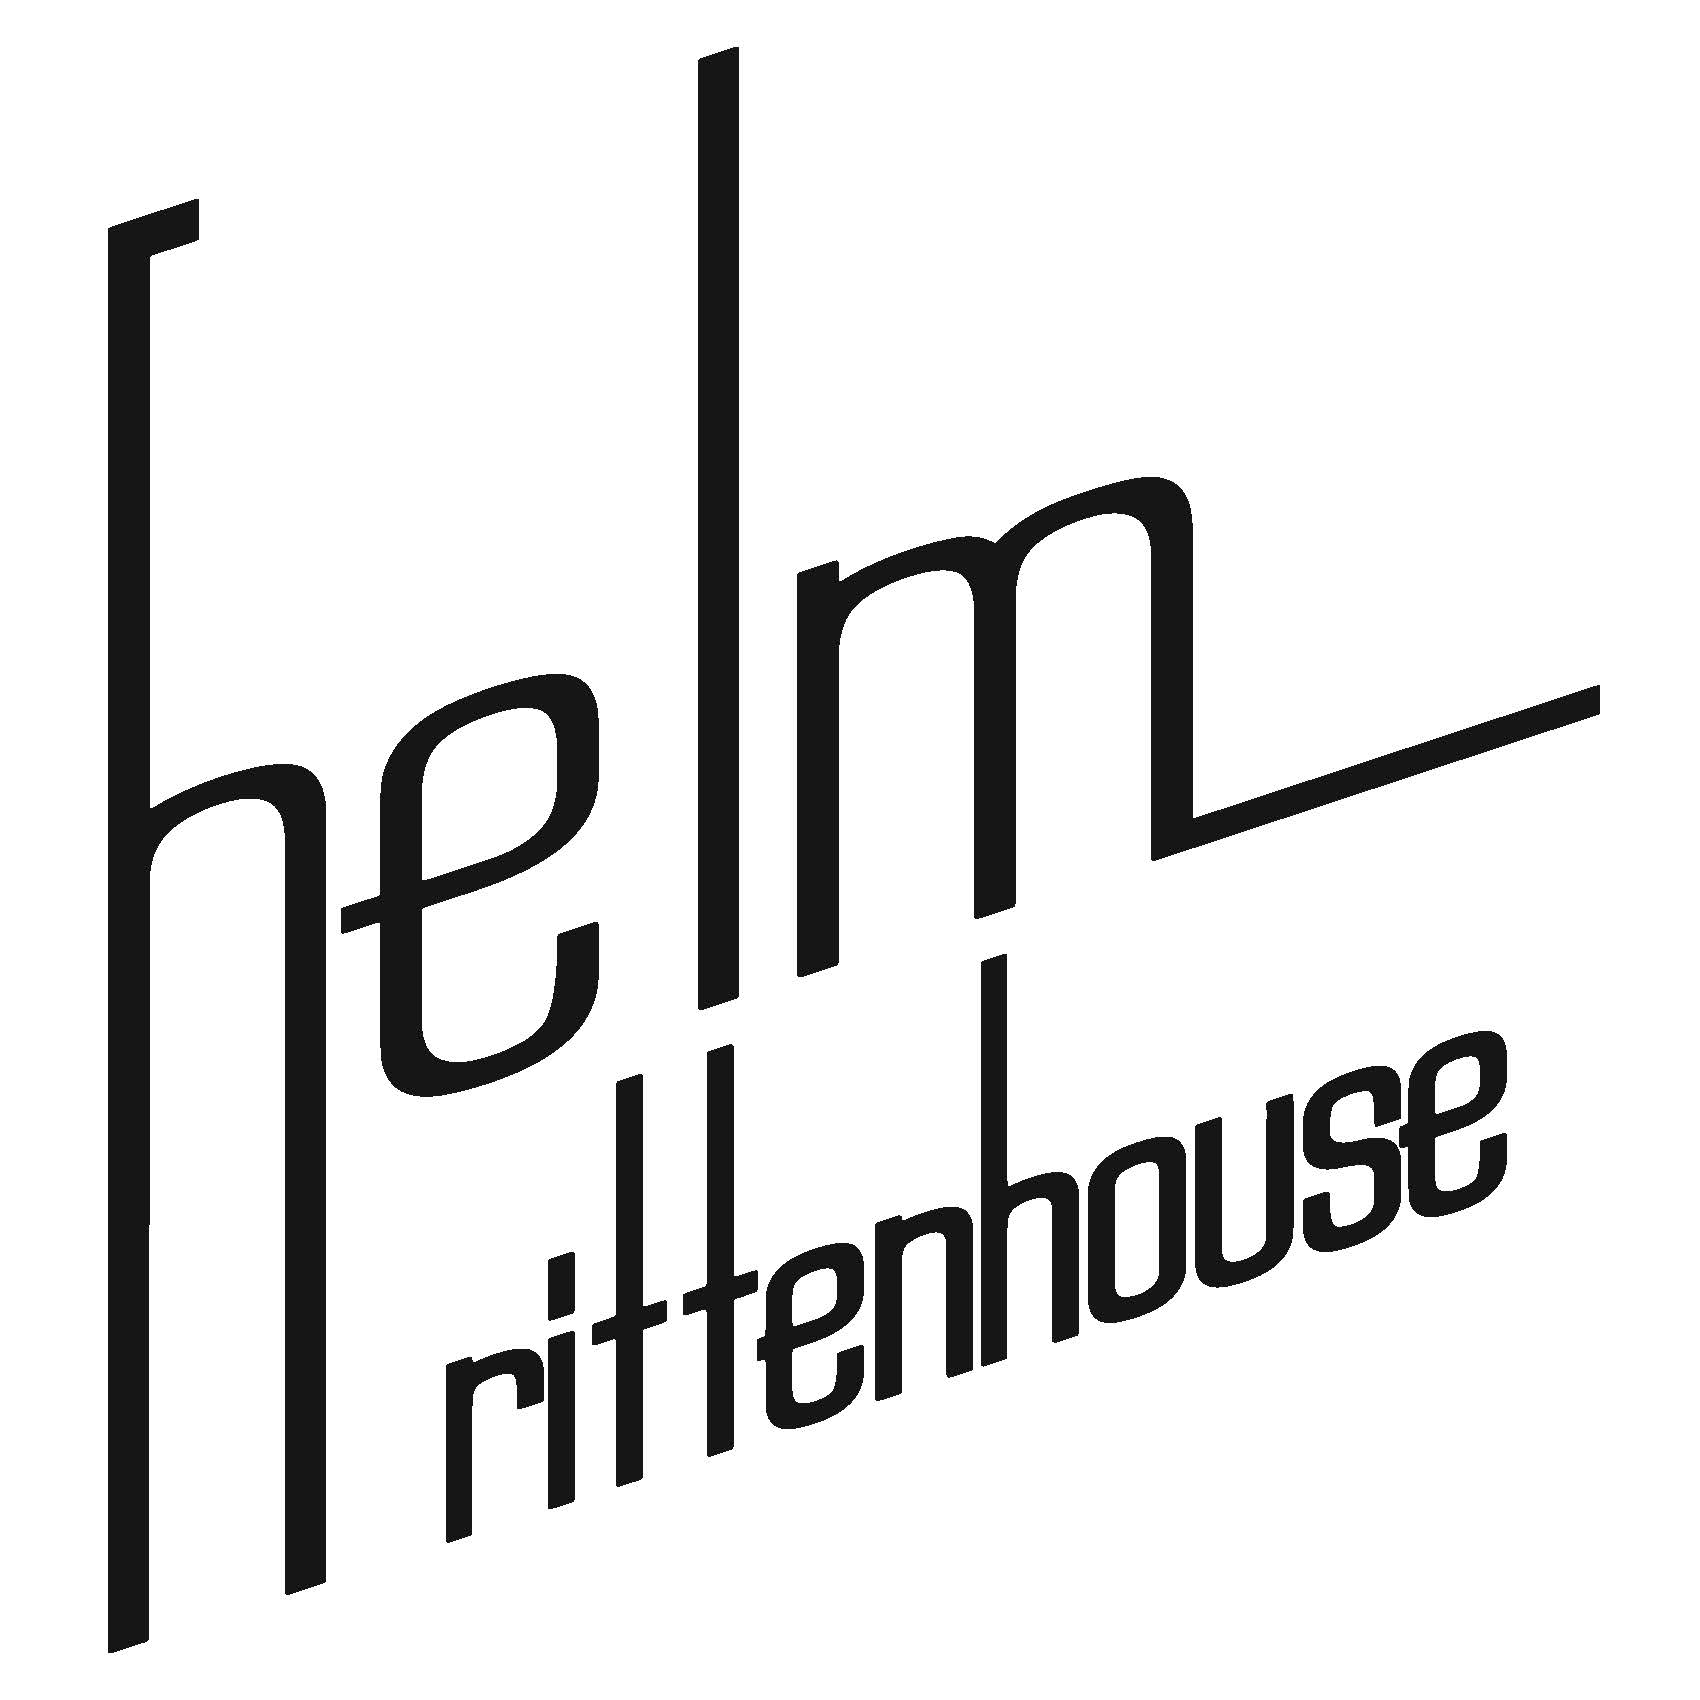 Helm Rittenhouse